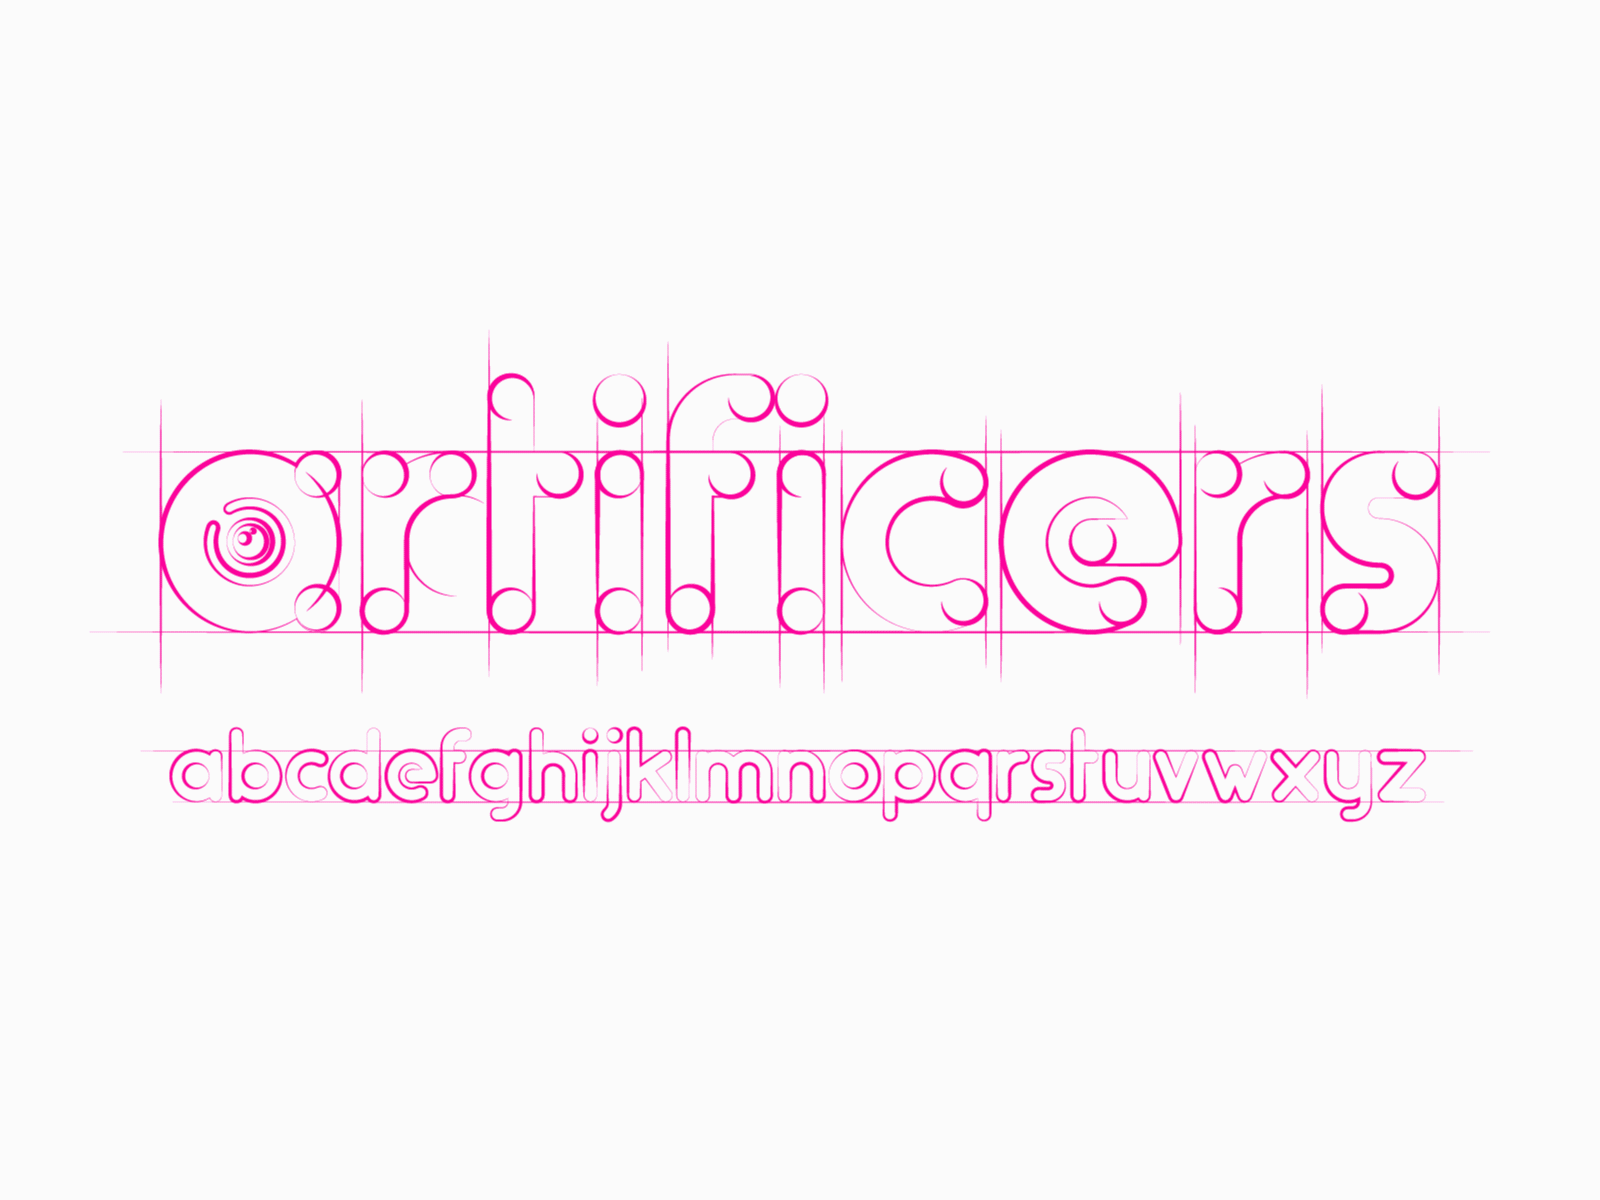 Artificers - Font Design